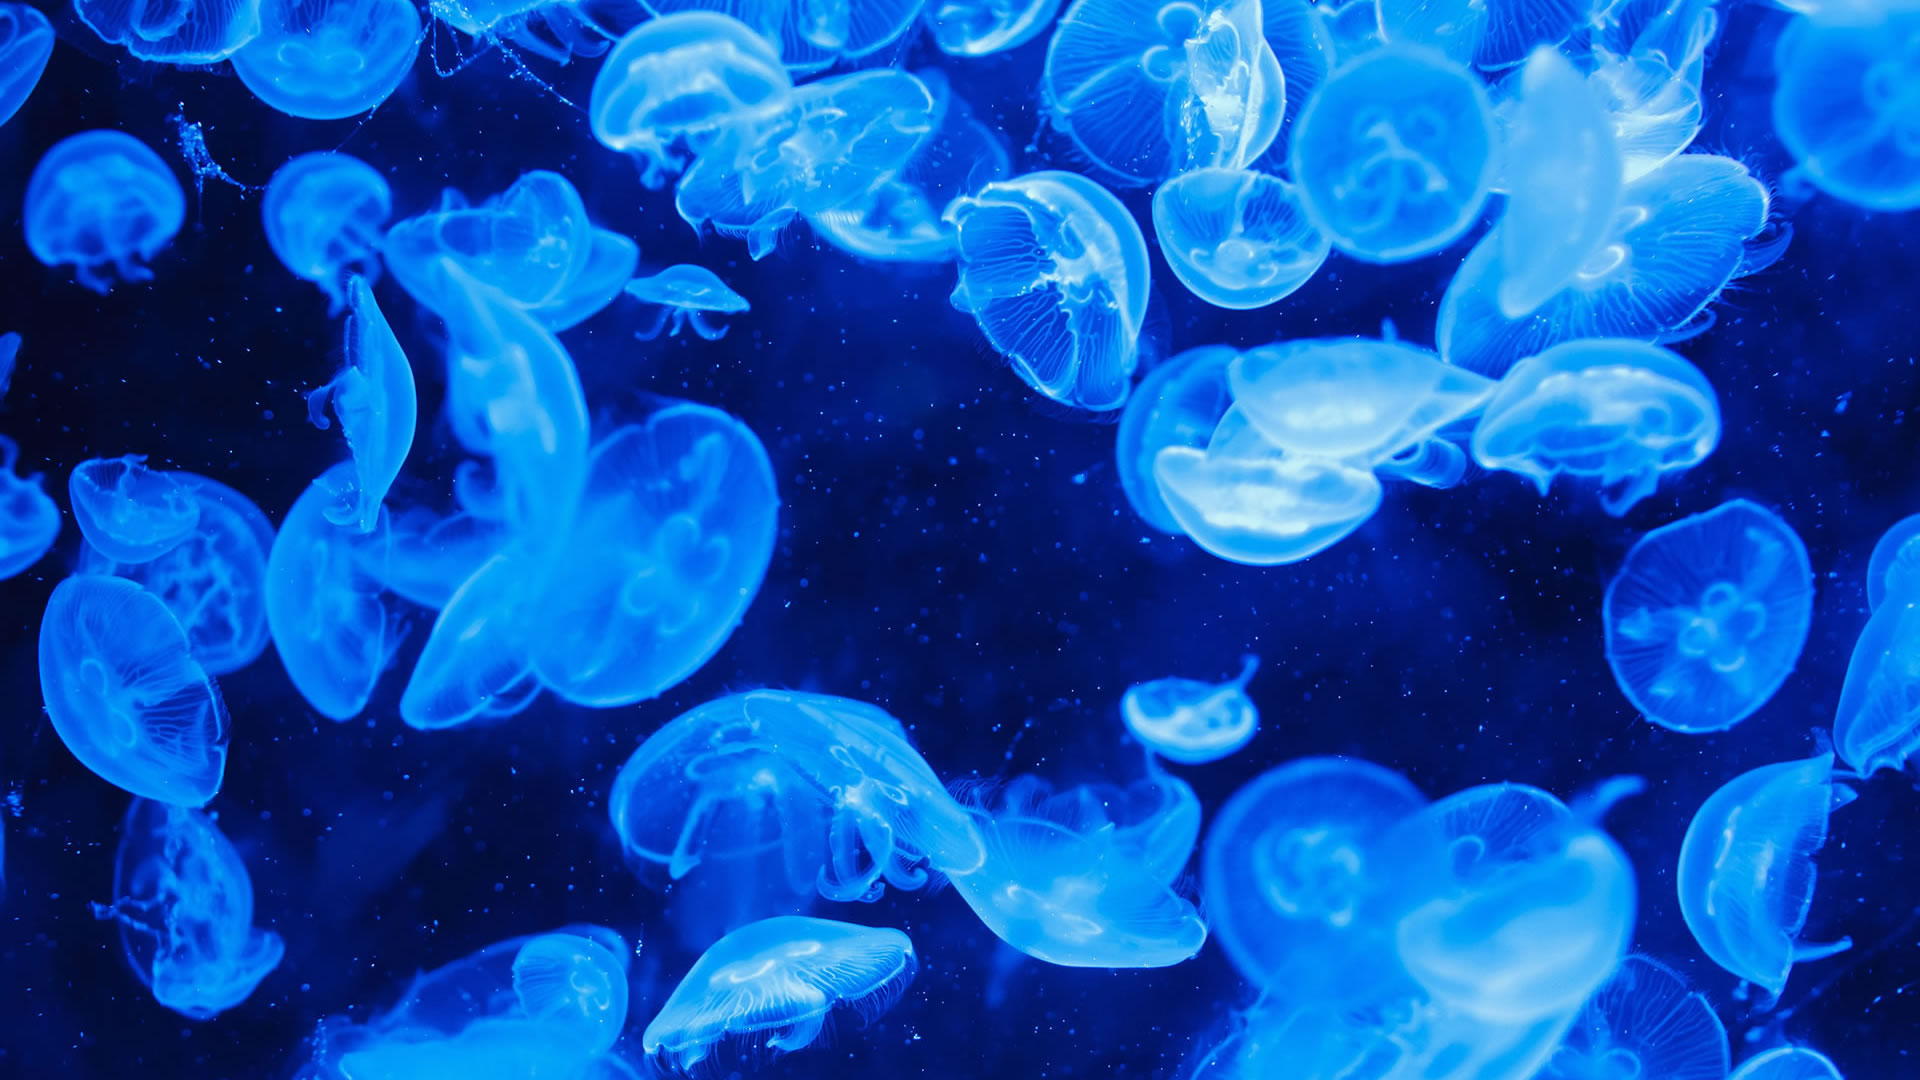 Jellyfish Desktop Wallpaper HD